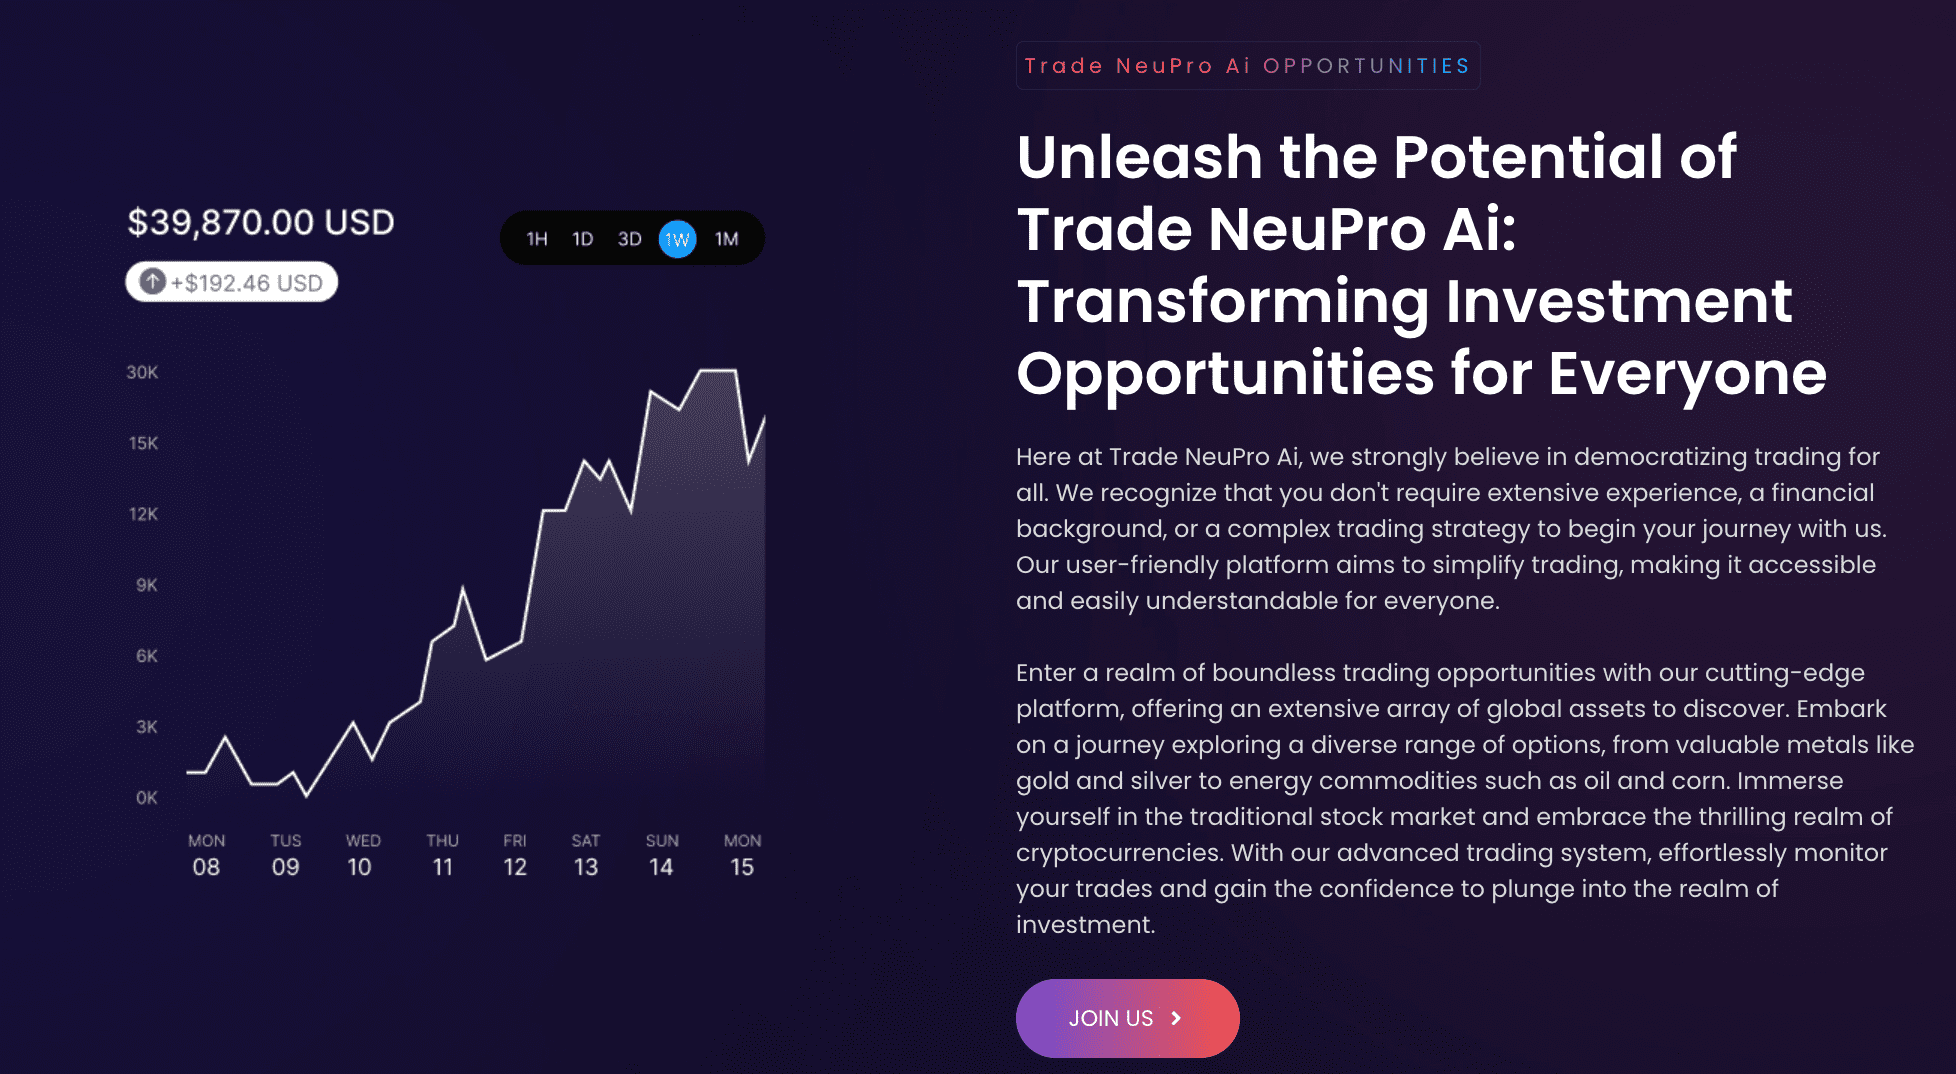 Trade i2 NeuPro (Model 2X) opportunités